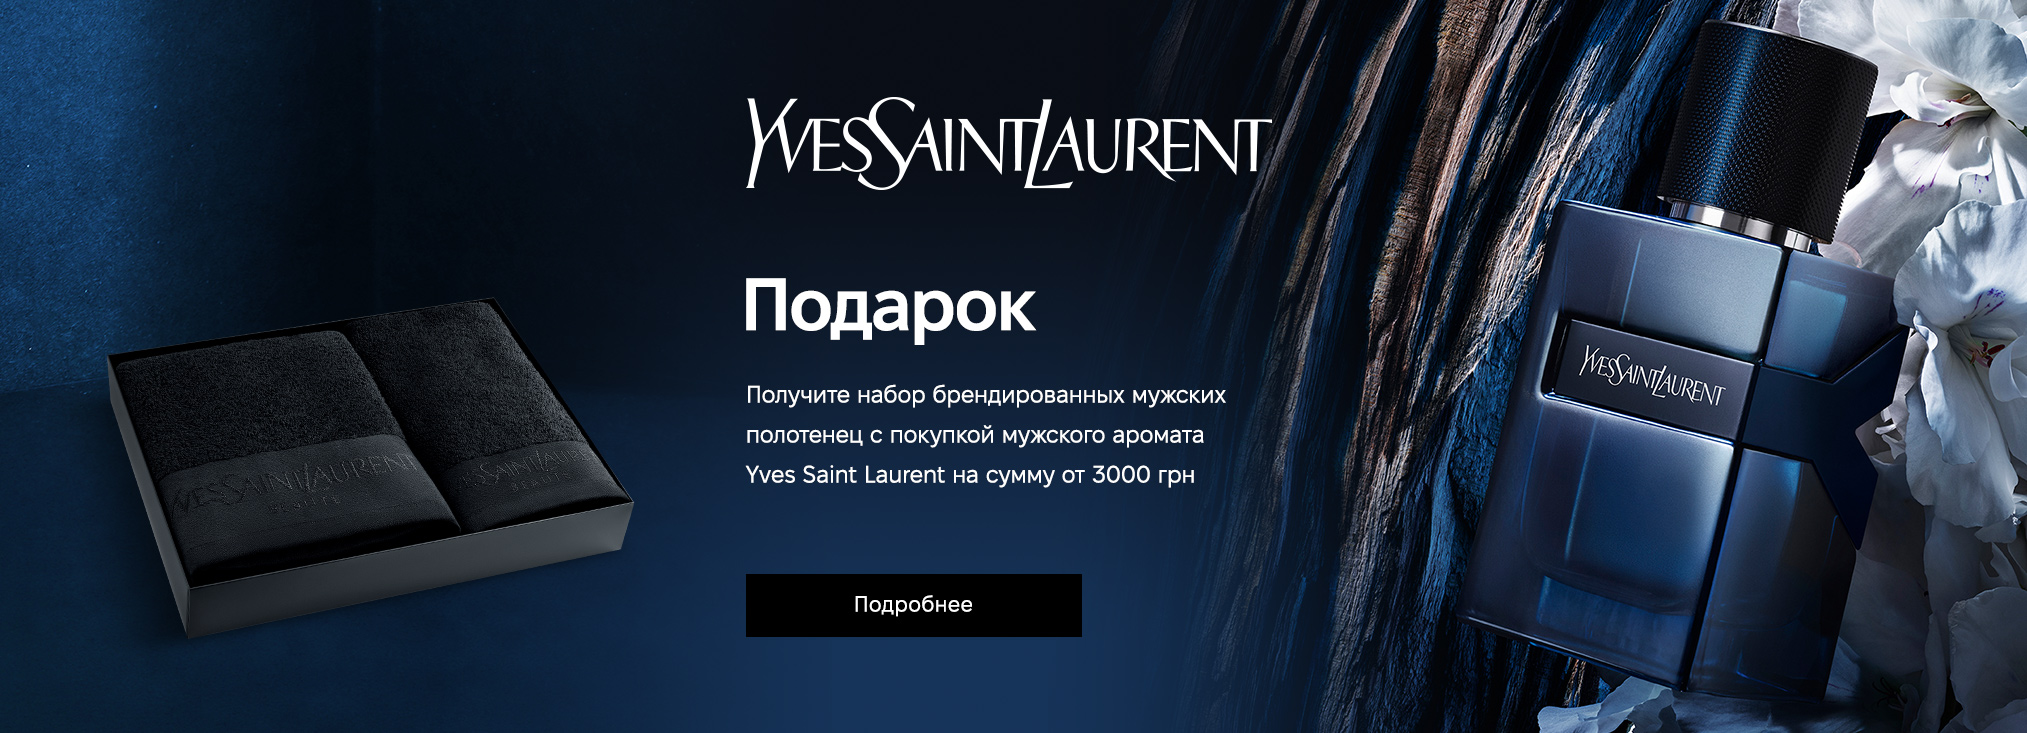 Yves Saint Laurent_3